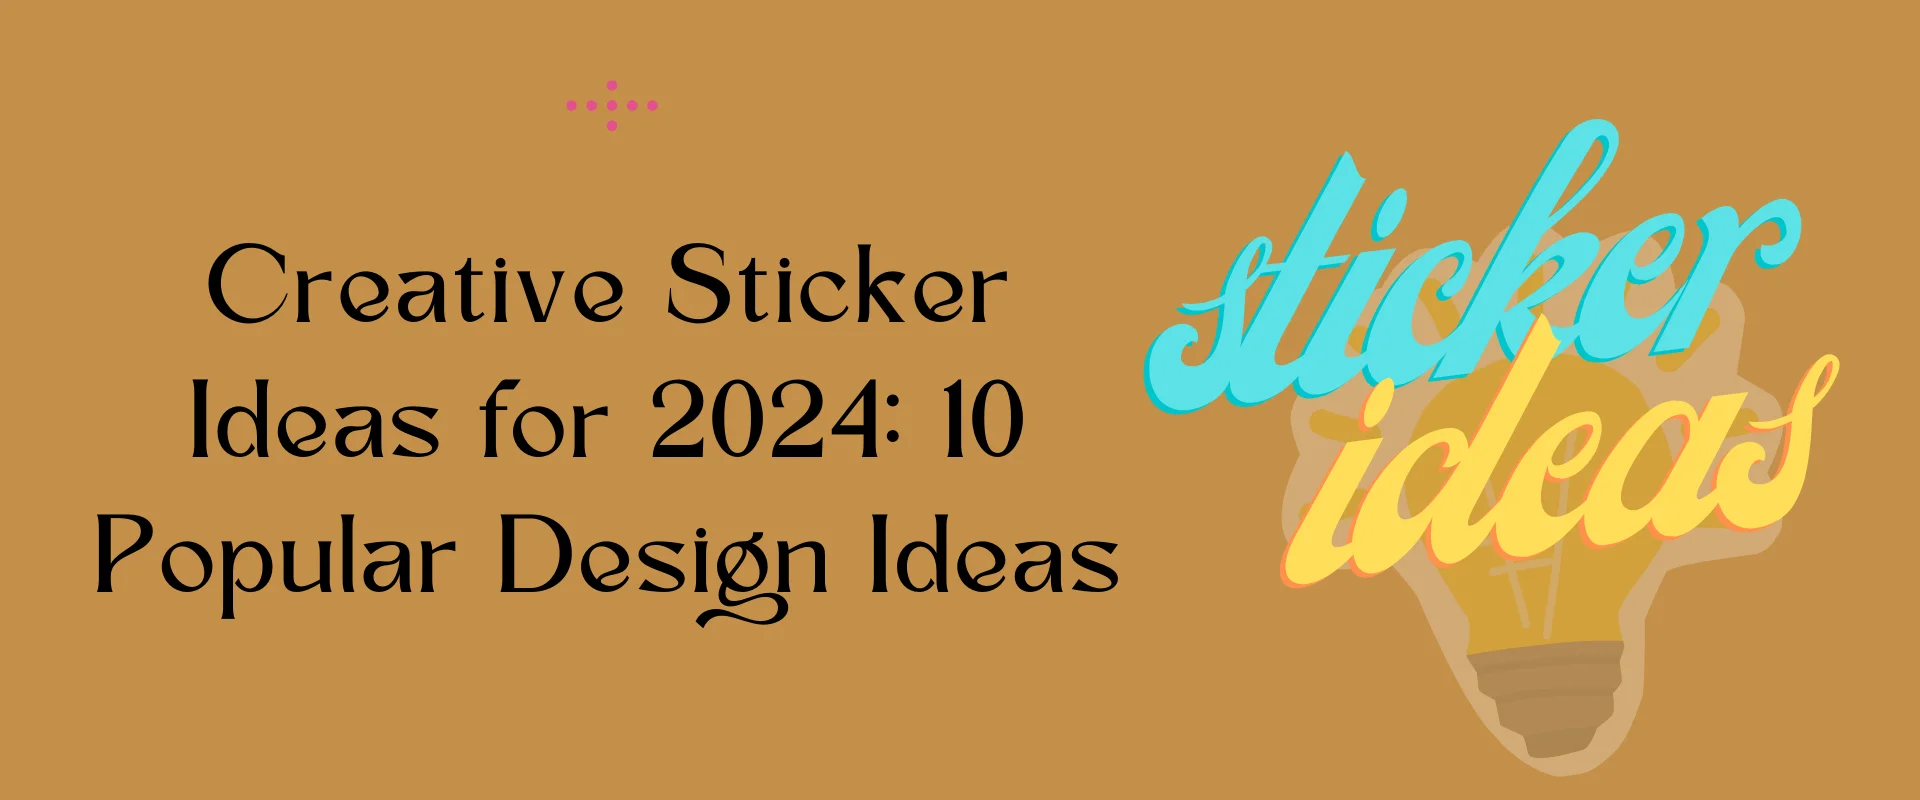 Creative Sticker Ideas for 2024: 10 Popular Design Ideas